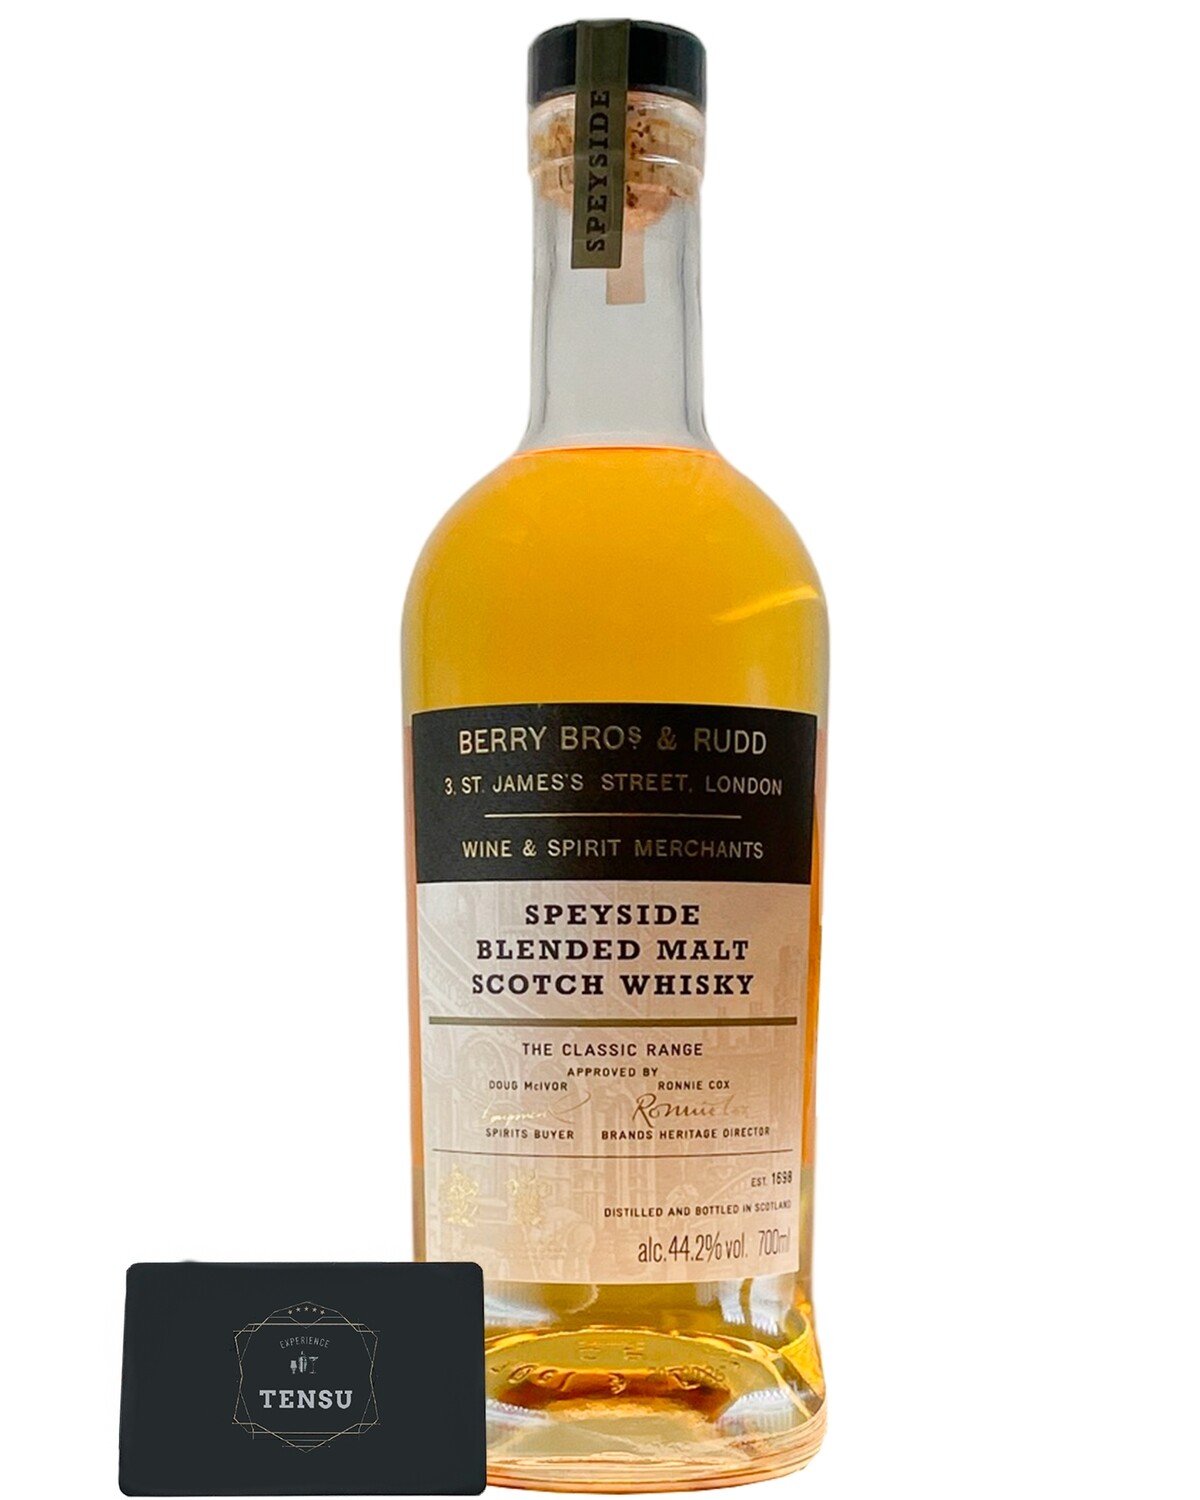 Speyside Blended Malt Scotch Whisky -The Classic Range- 44.2 "Berry Bros & Rudd"